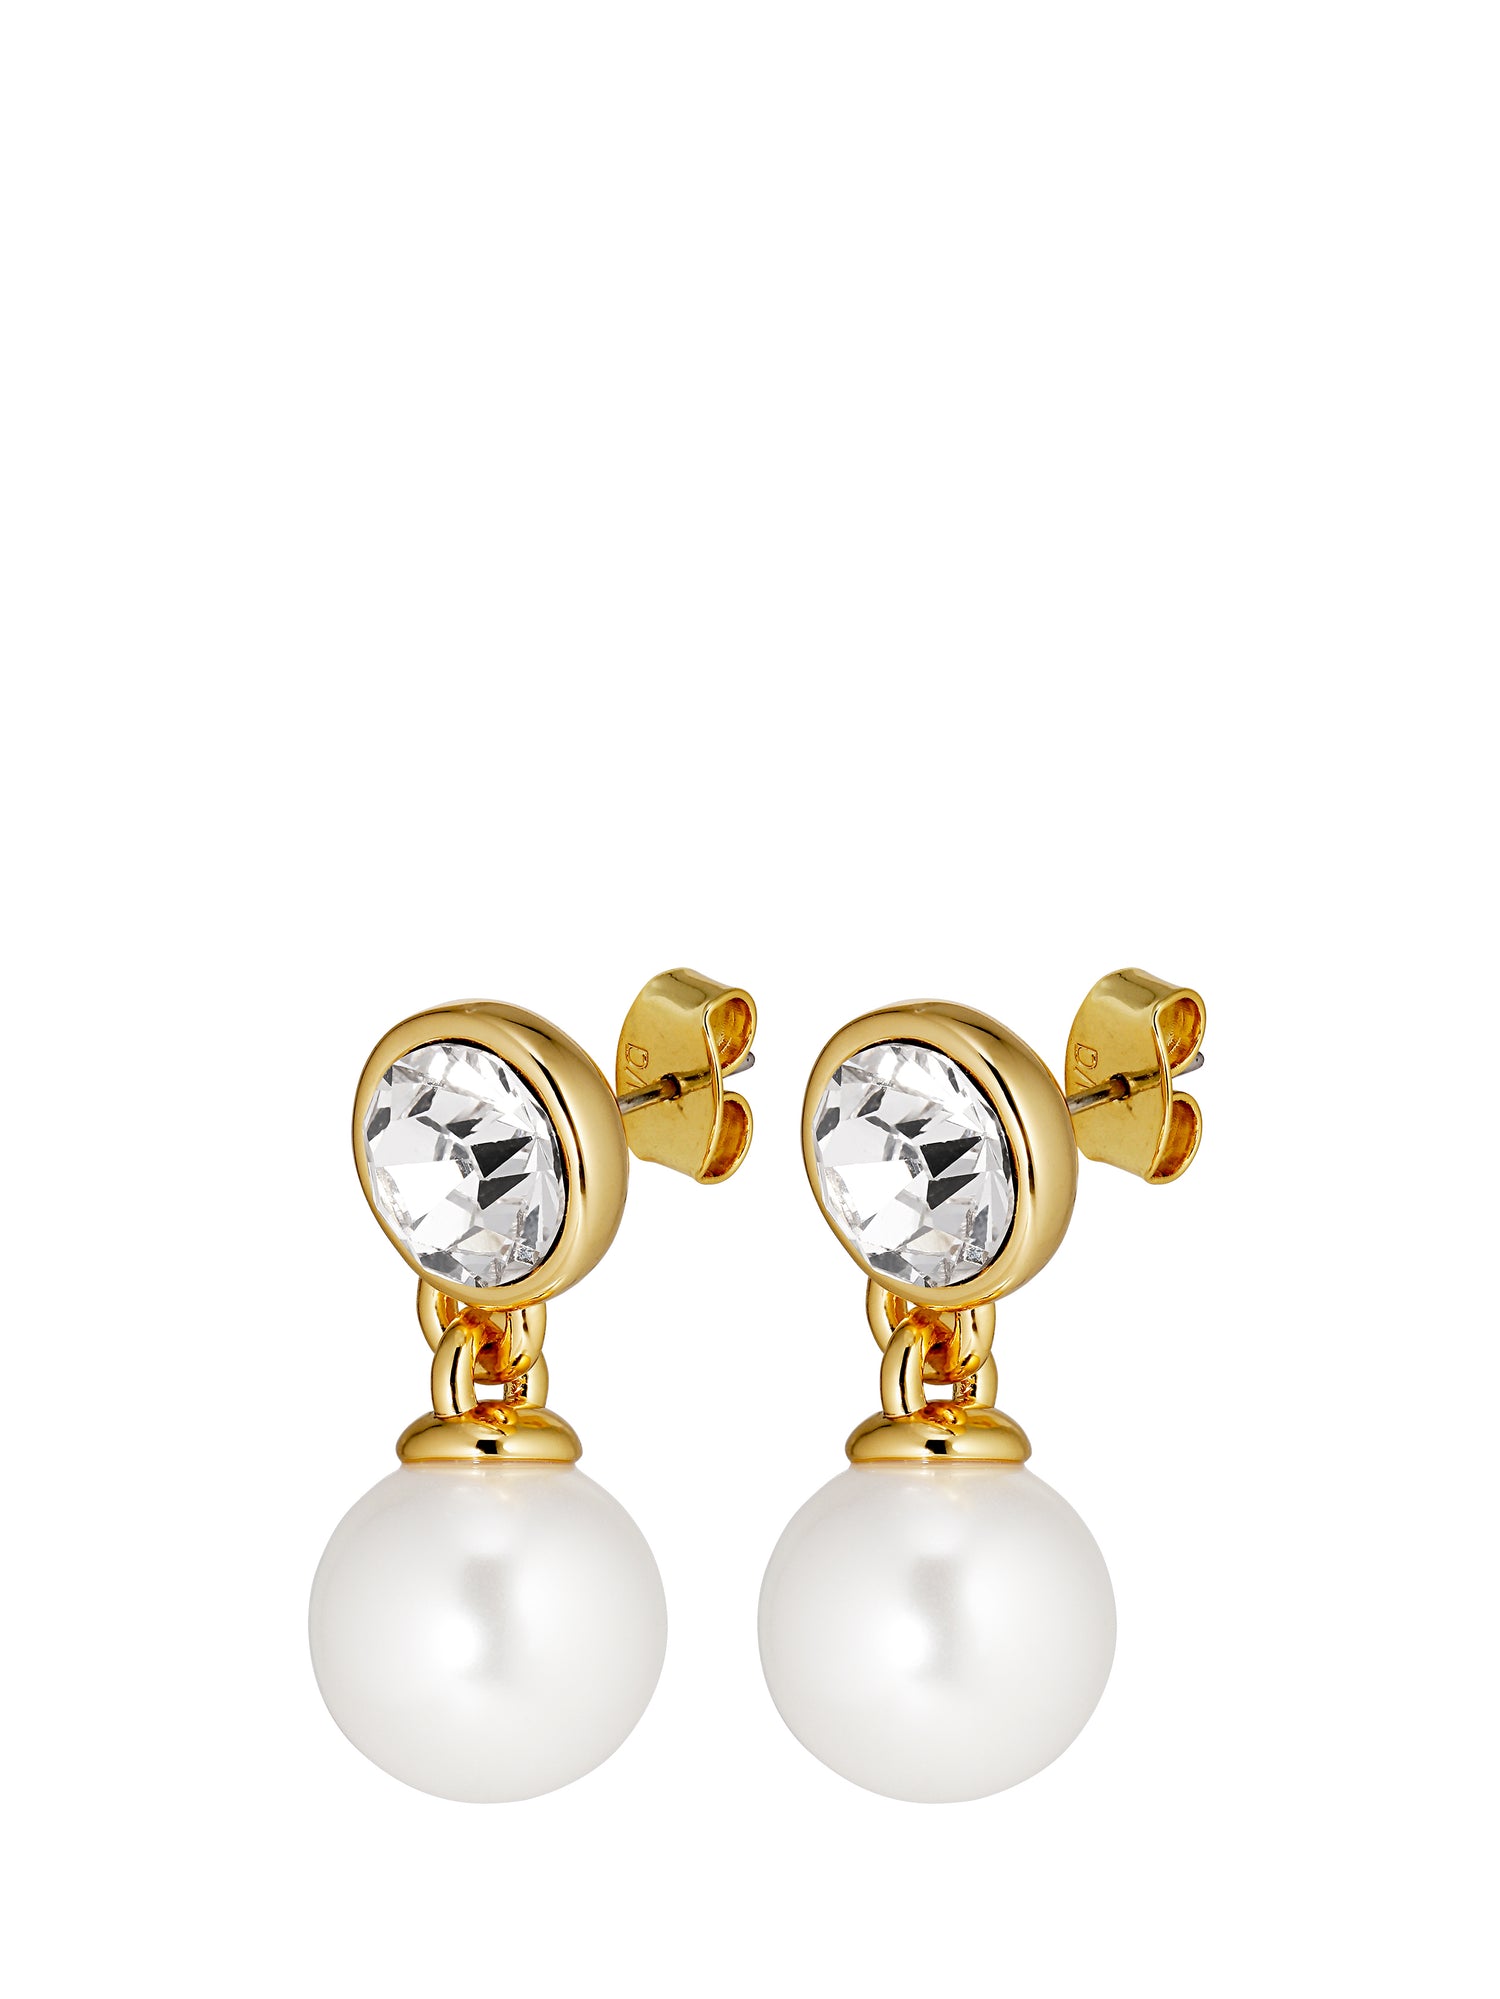 NETTE golden earrings, clear crystal - white pearl